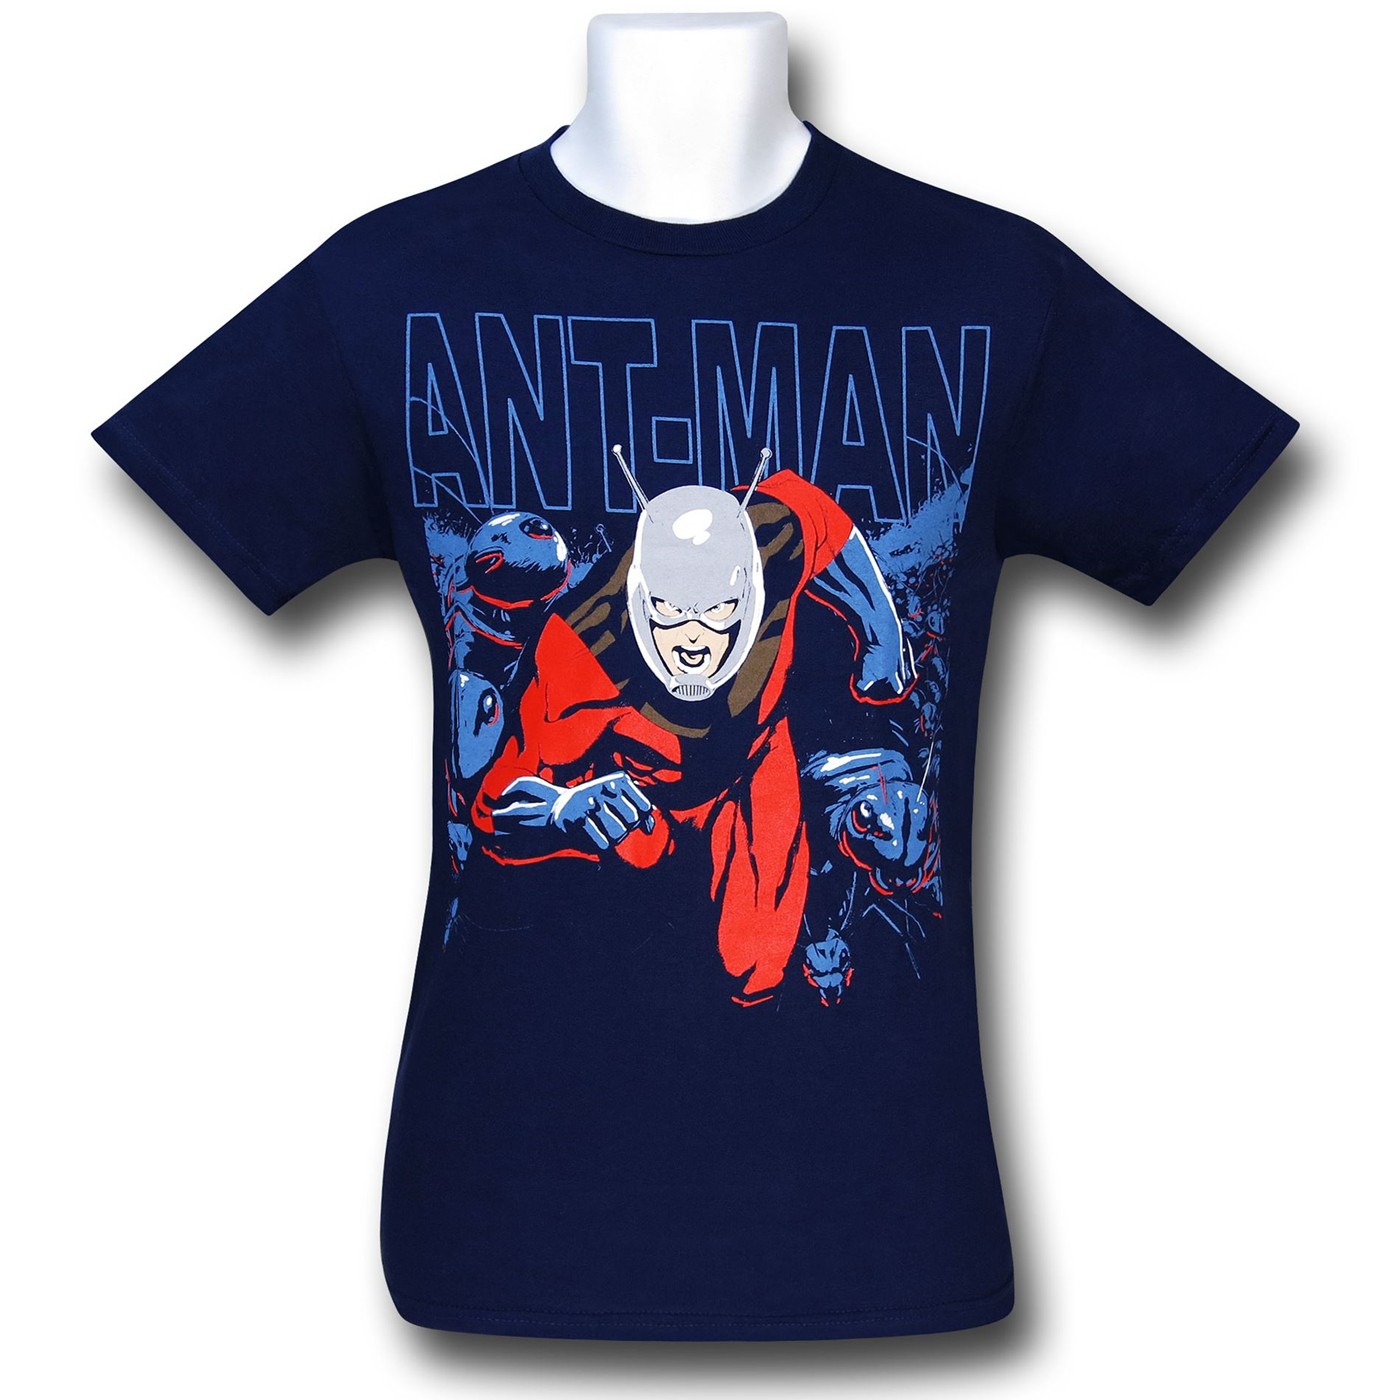 Ant-Man Swarm Navy T-Shirt